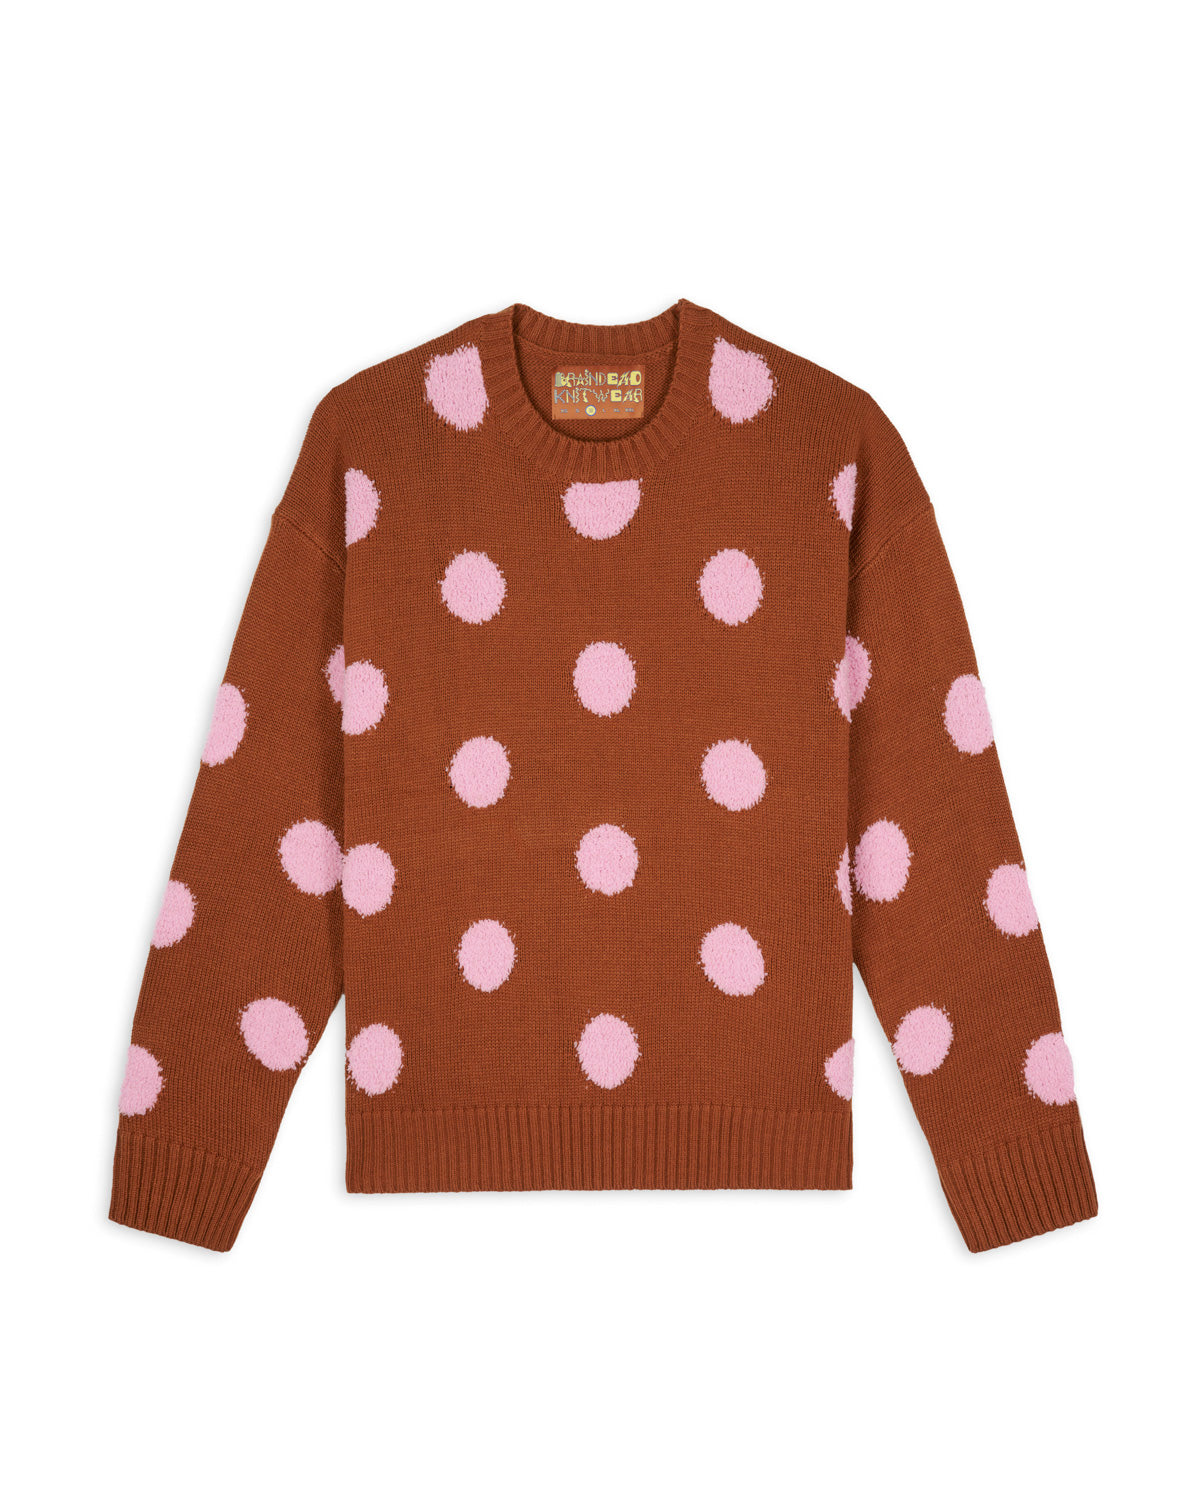 Polka Pile Crewneck Sweater - Light Brown 1